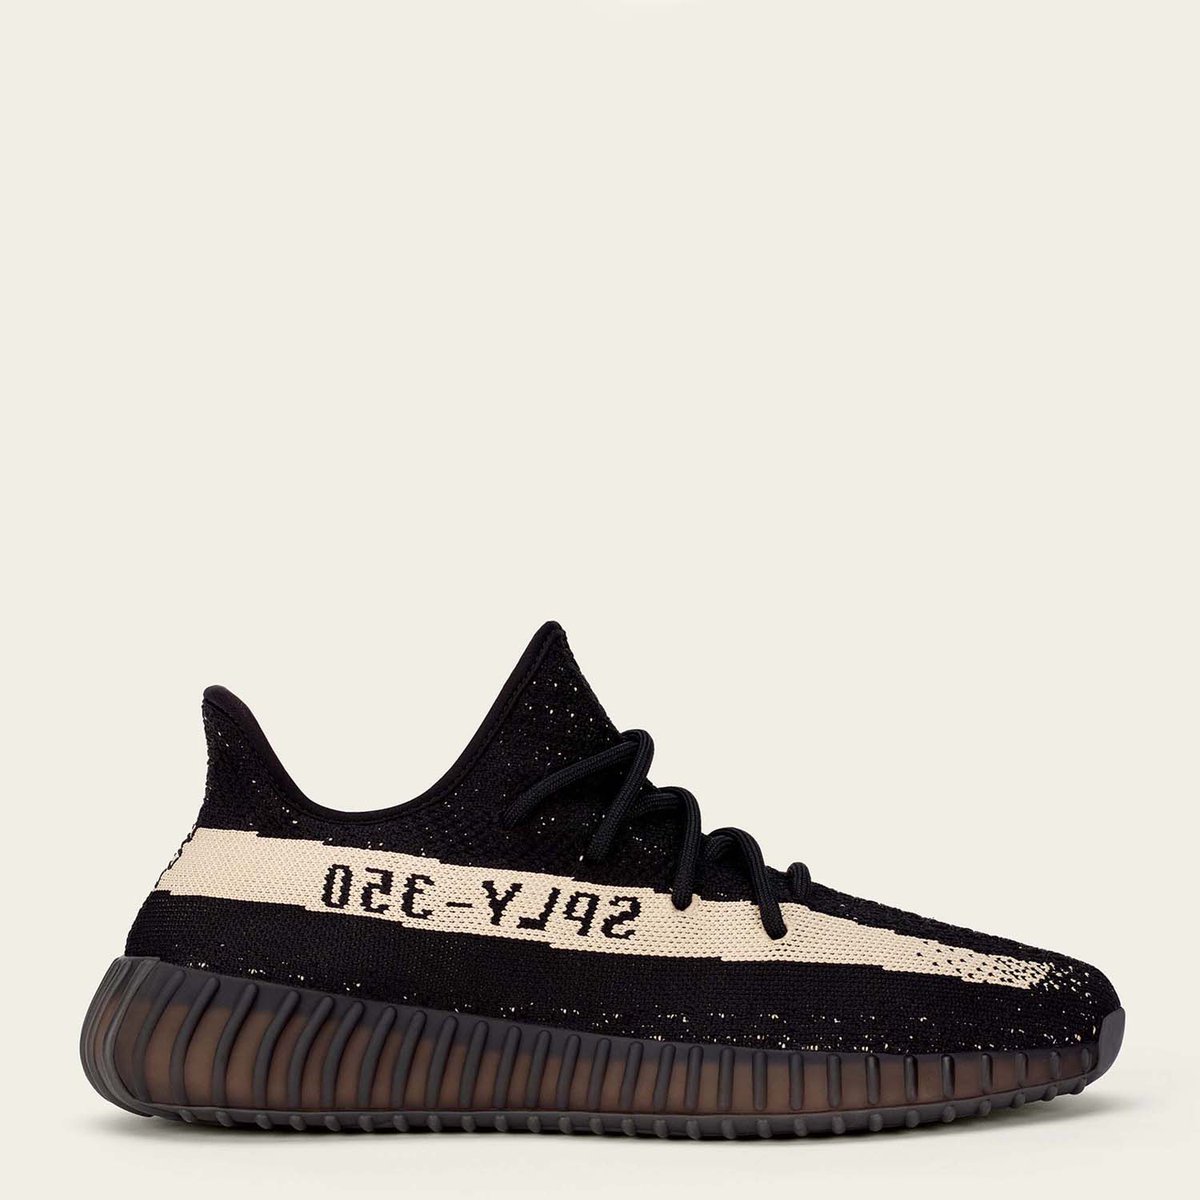 adidas Yeezy Boost 350 "Black/White" Info — Sneaker